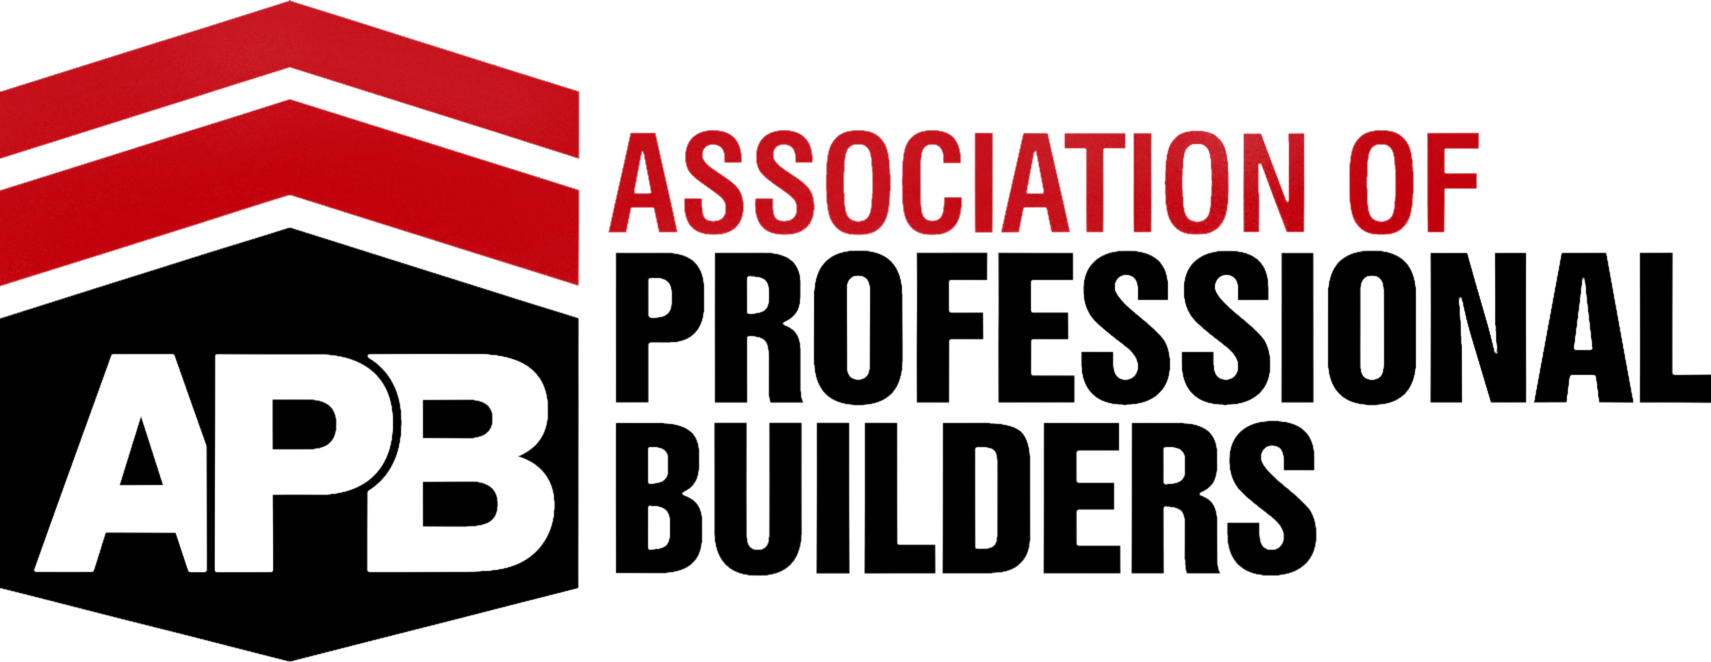 Association of Professional Builders logo